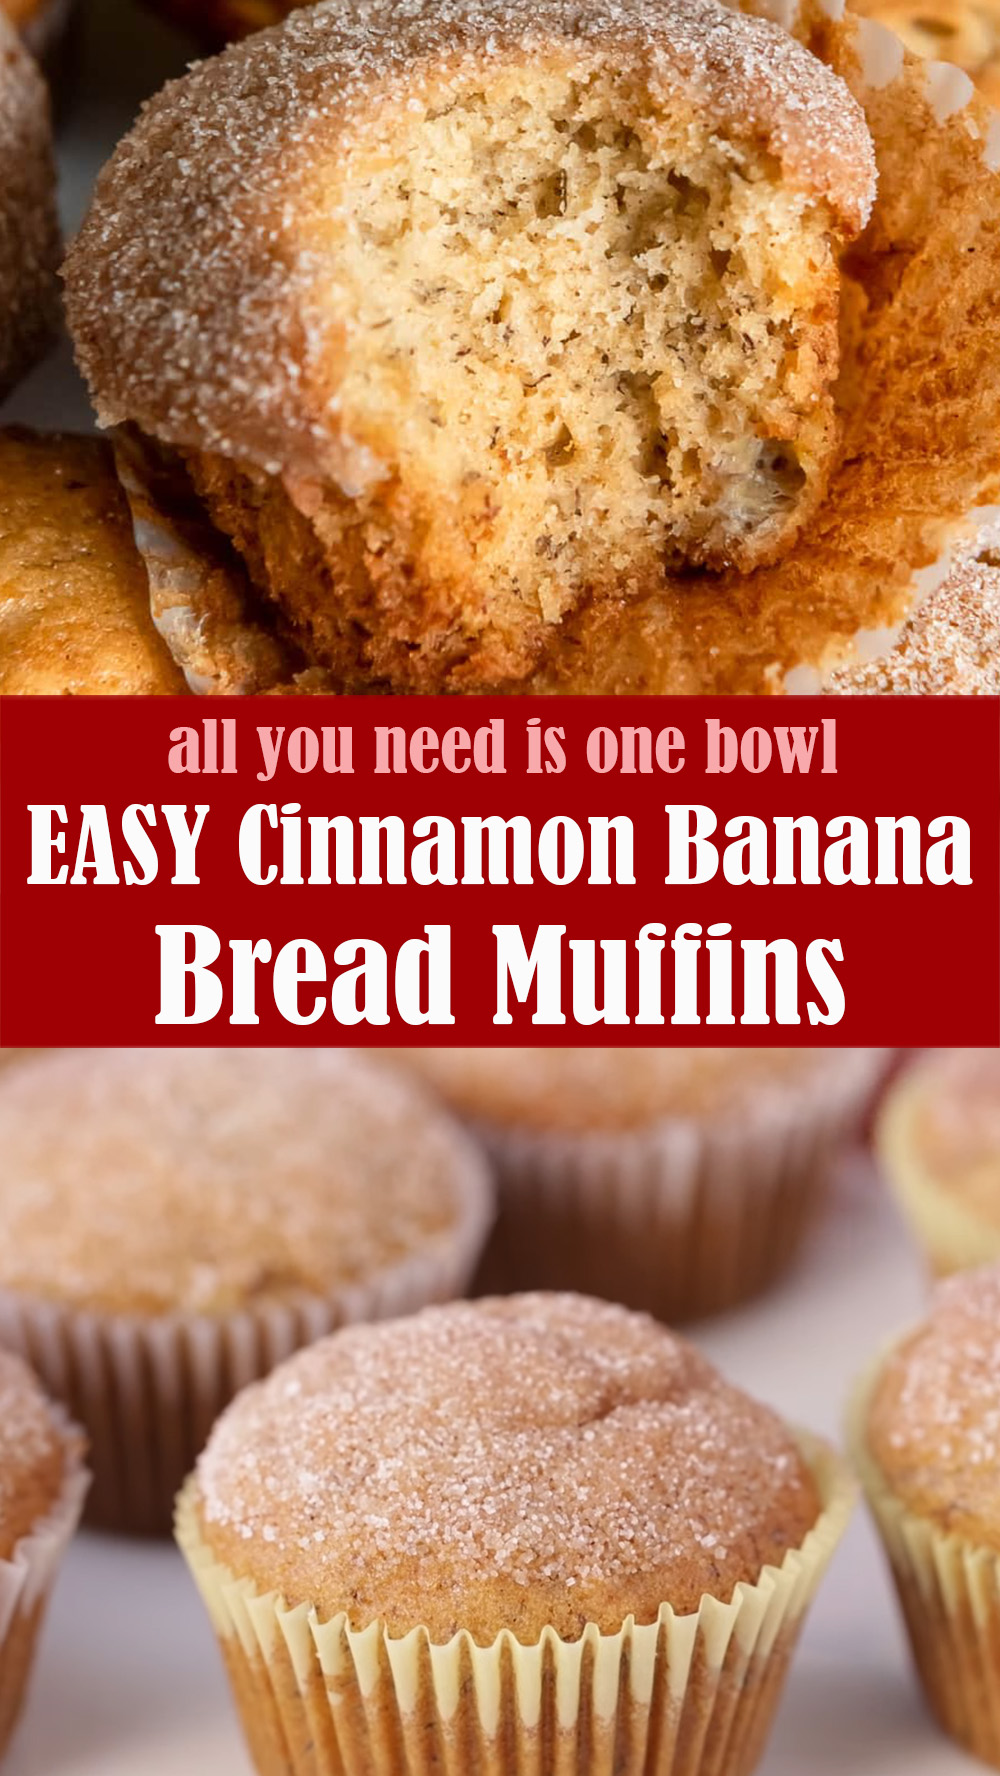 EASY Cinnamon Banana Bread Muffins